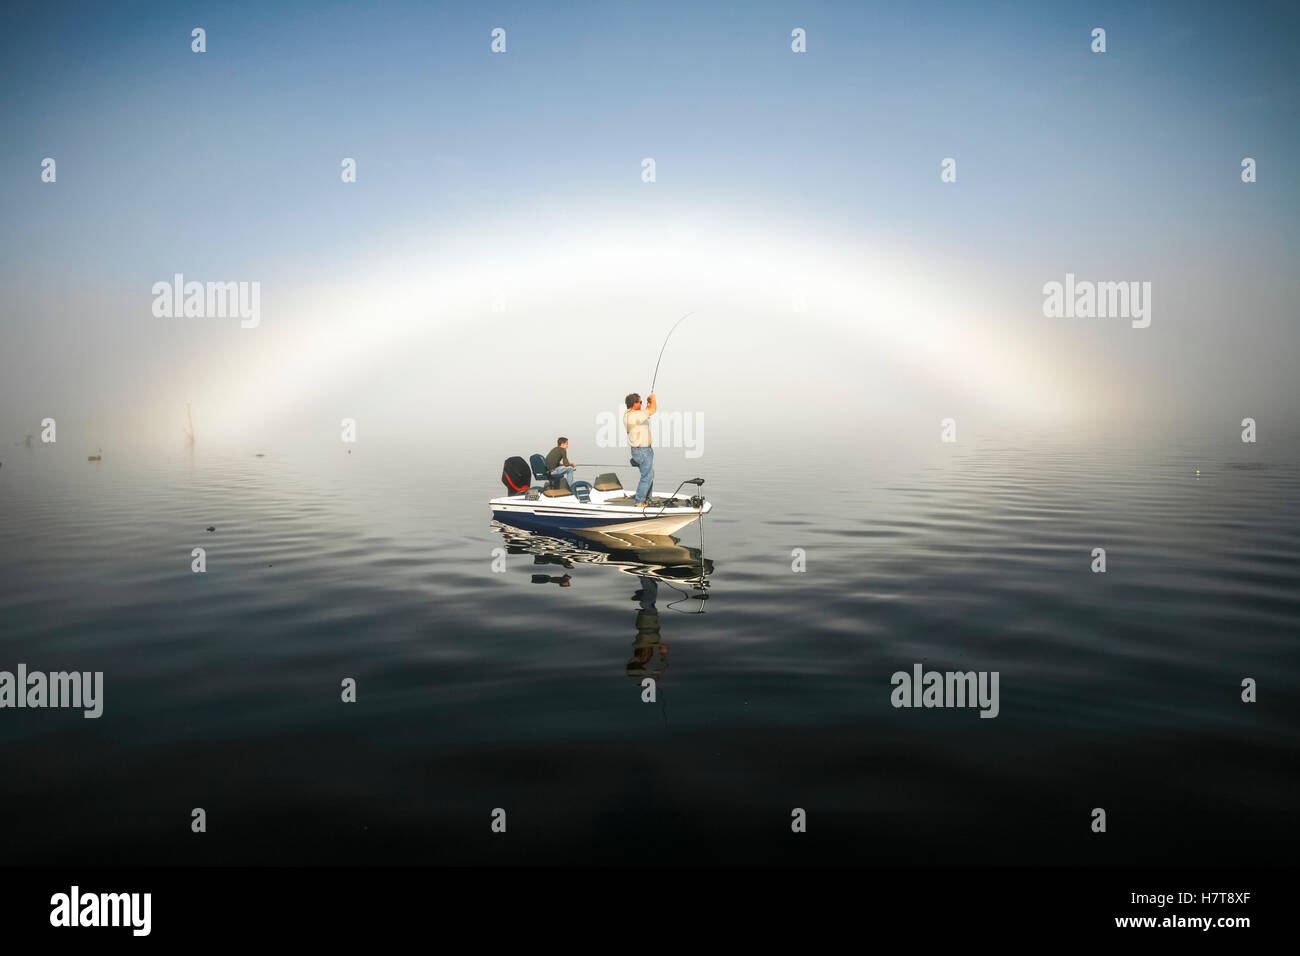 Fisherman In Boat On Water Stock Photo